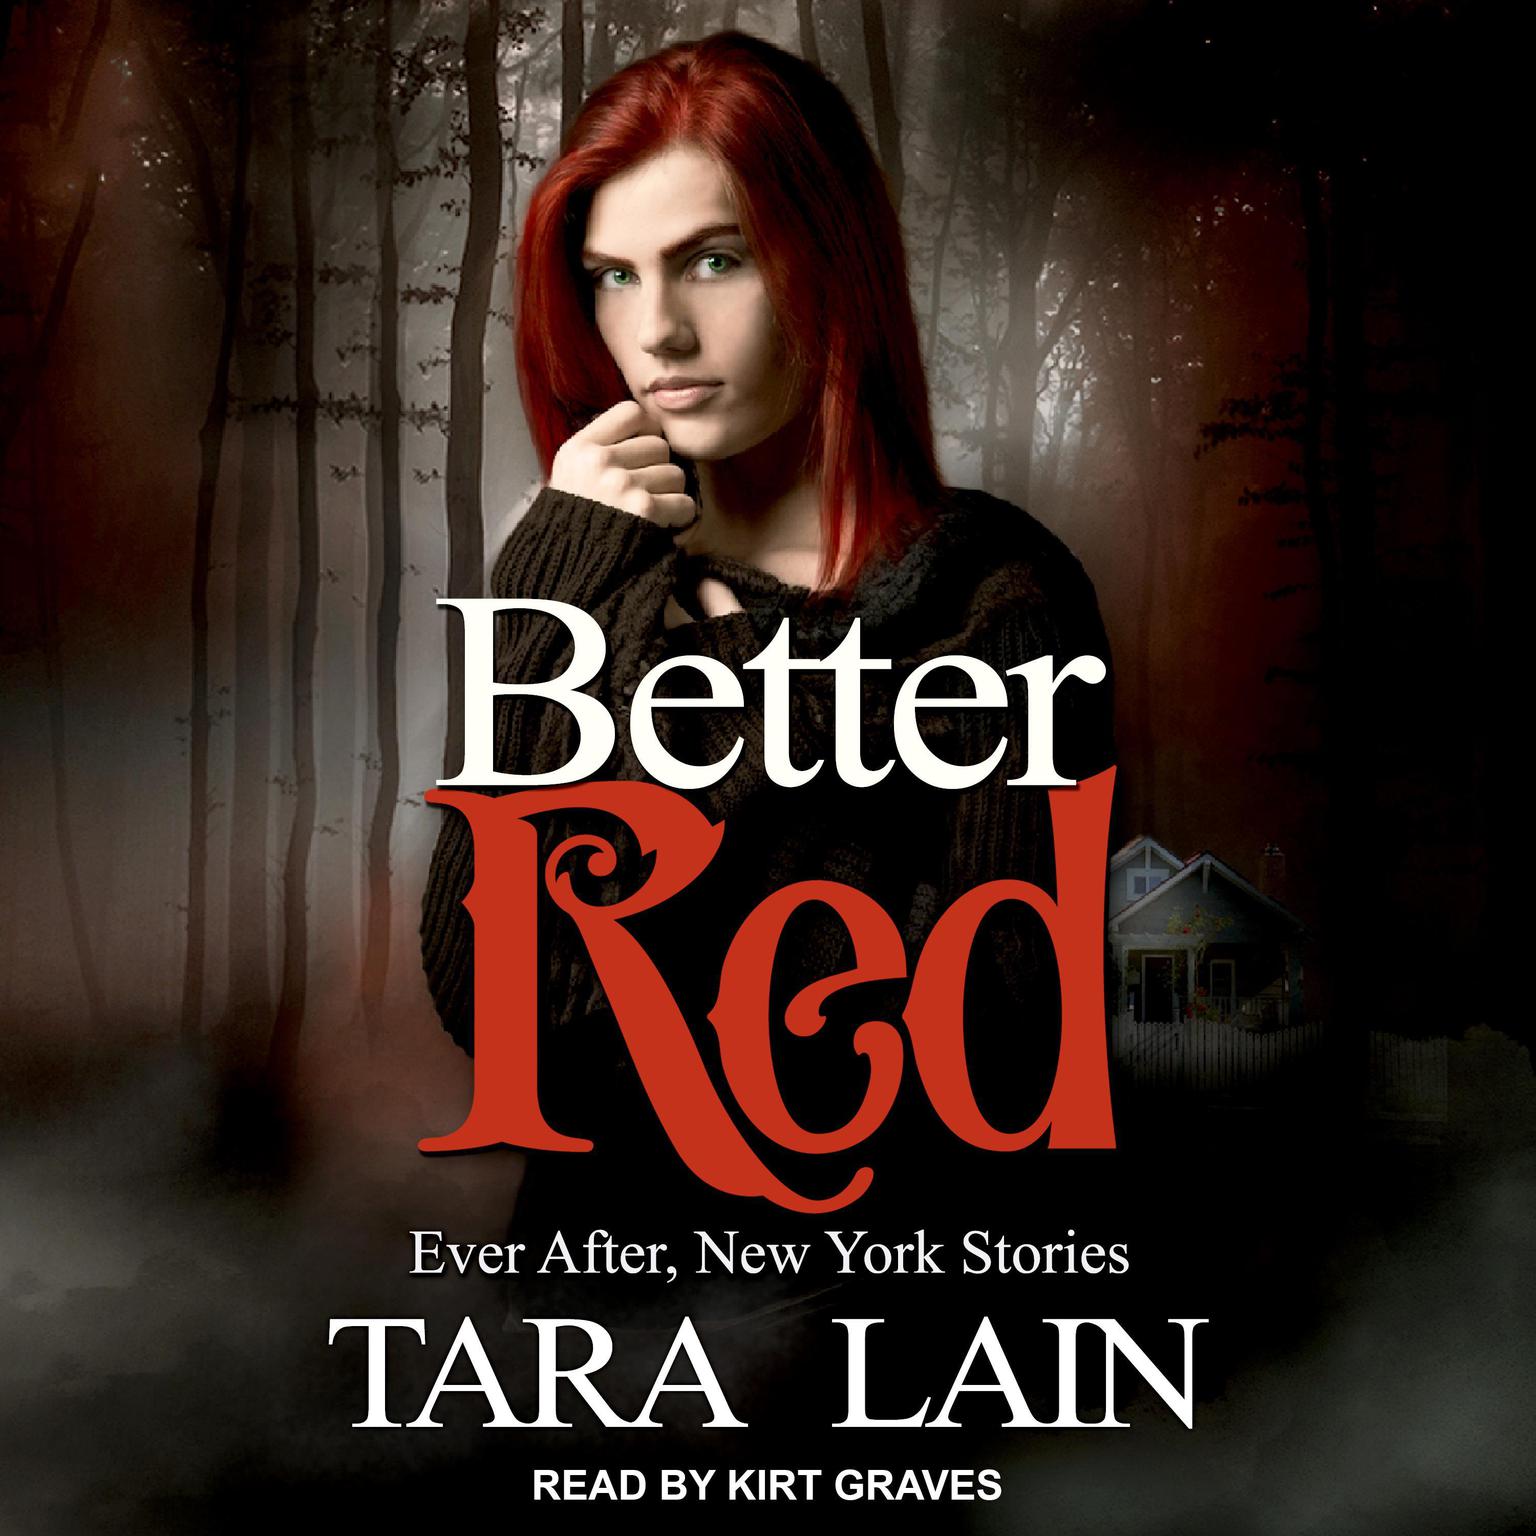 Better Red Audiobook, by Tara Lain